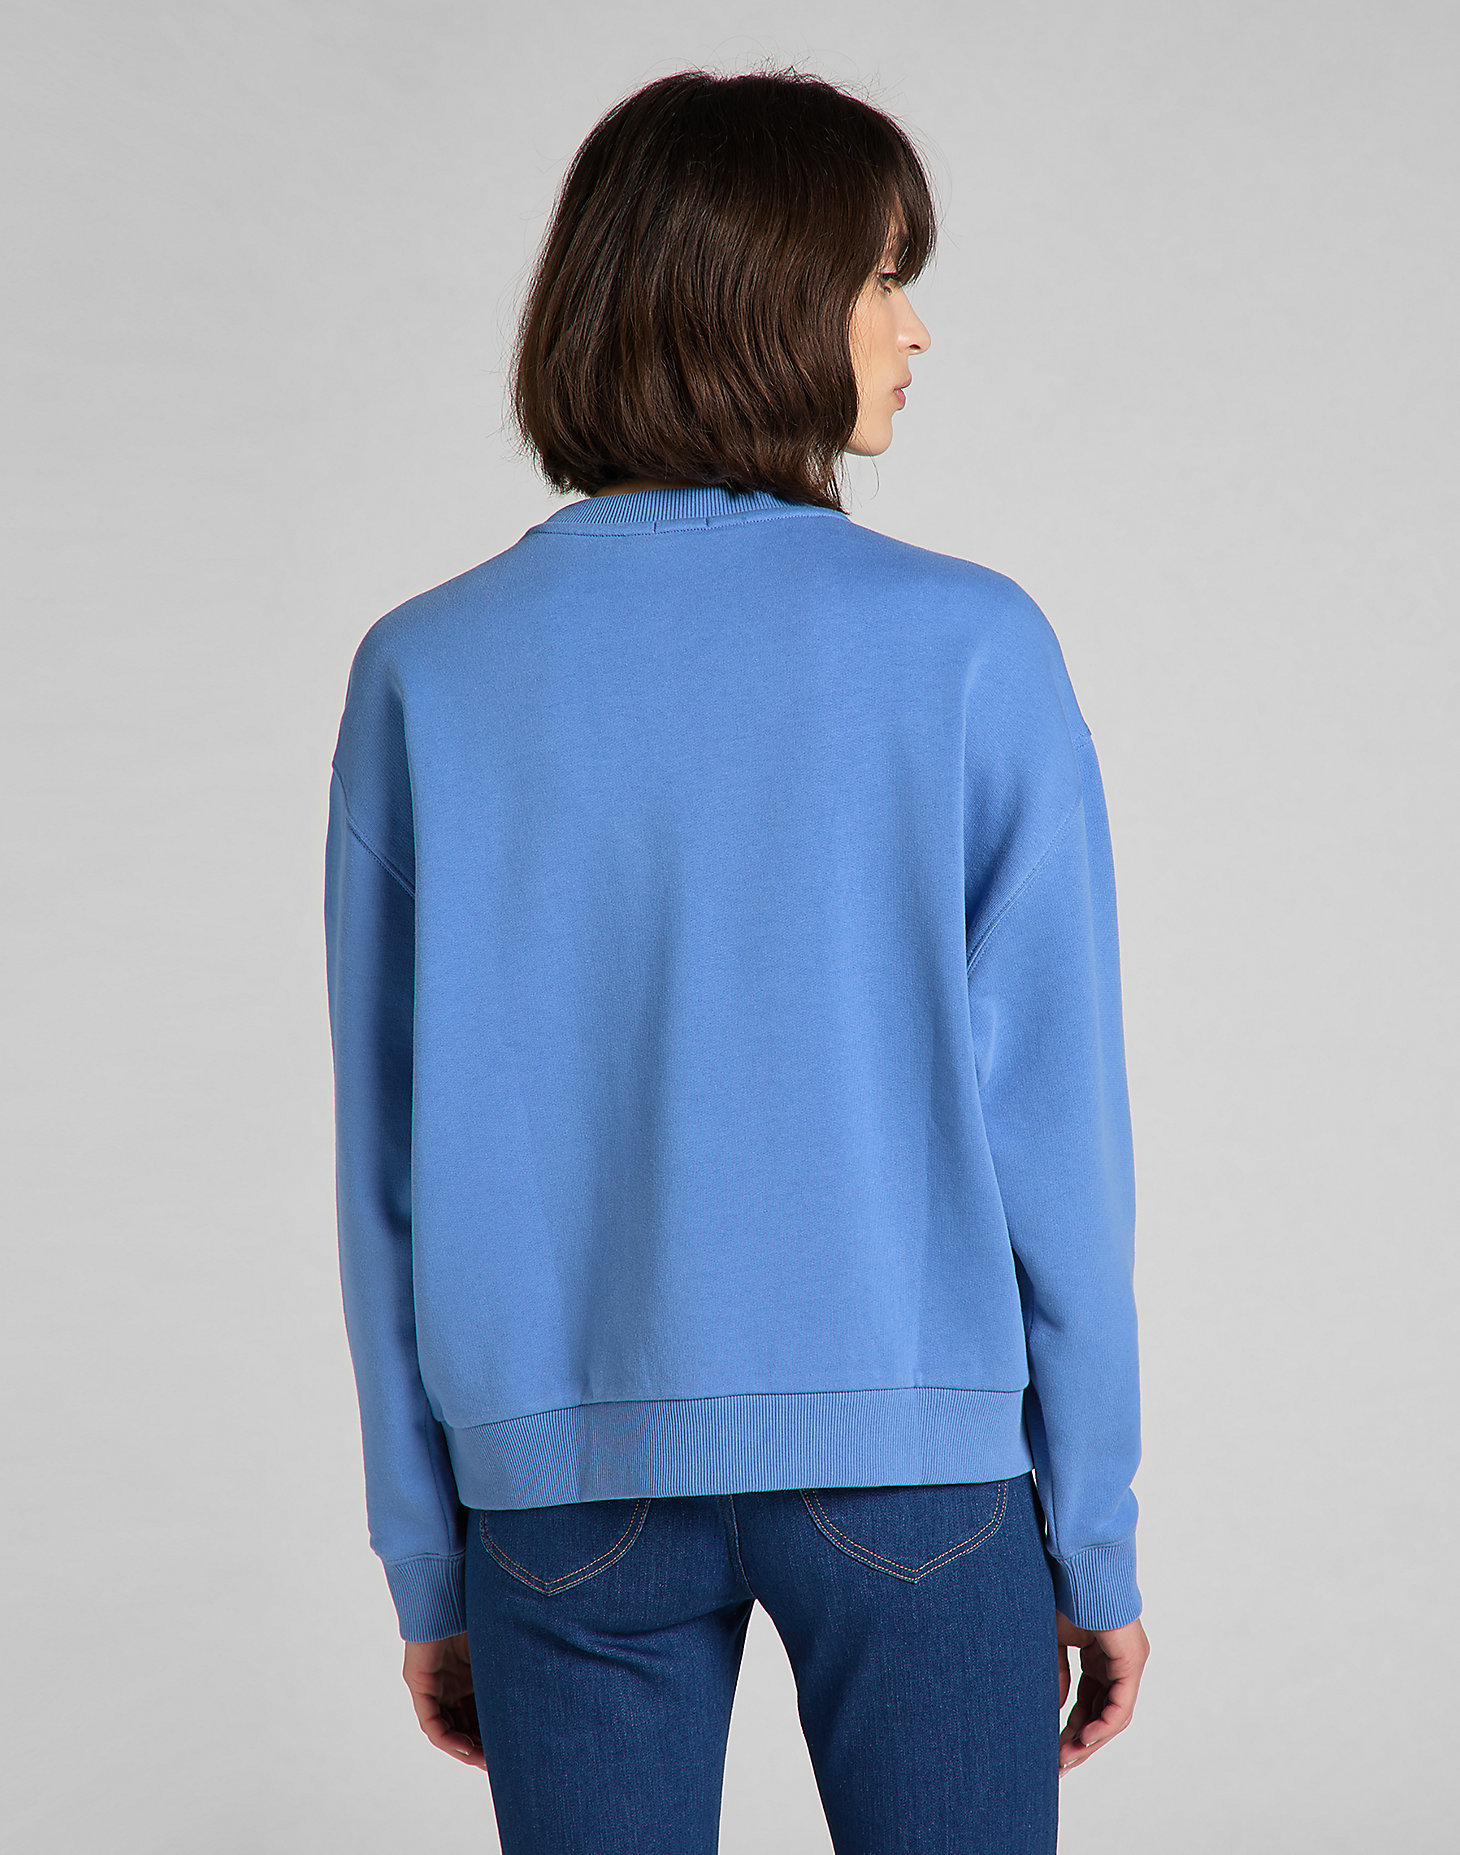 Sweatshirt in Blue Yonder alternative view 1